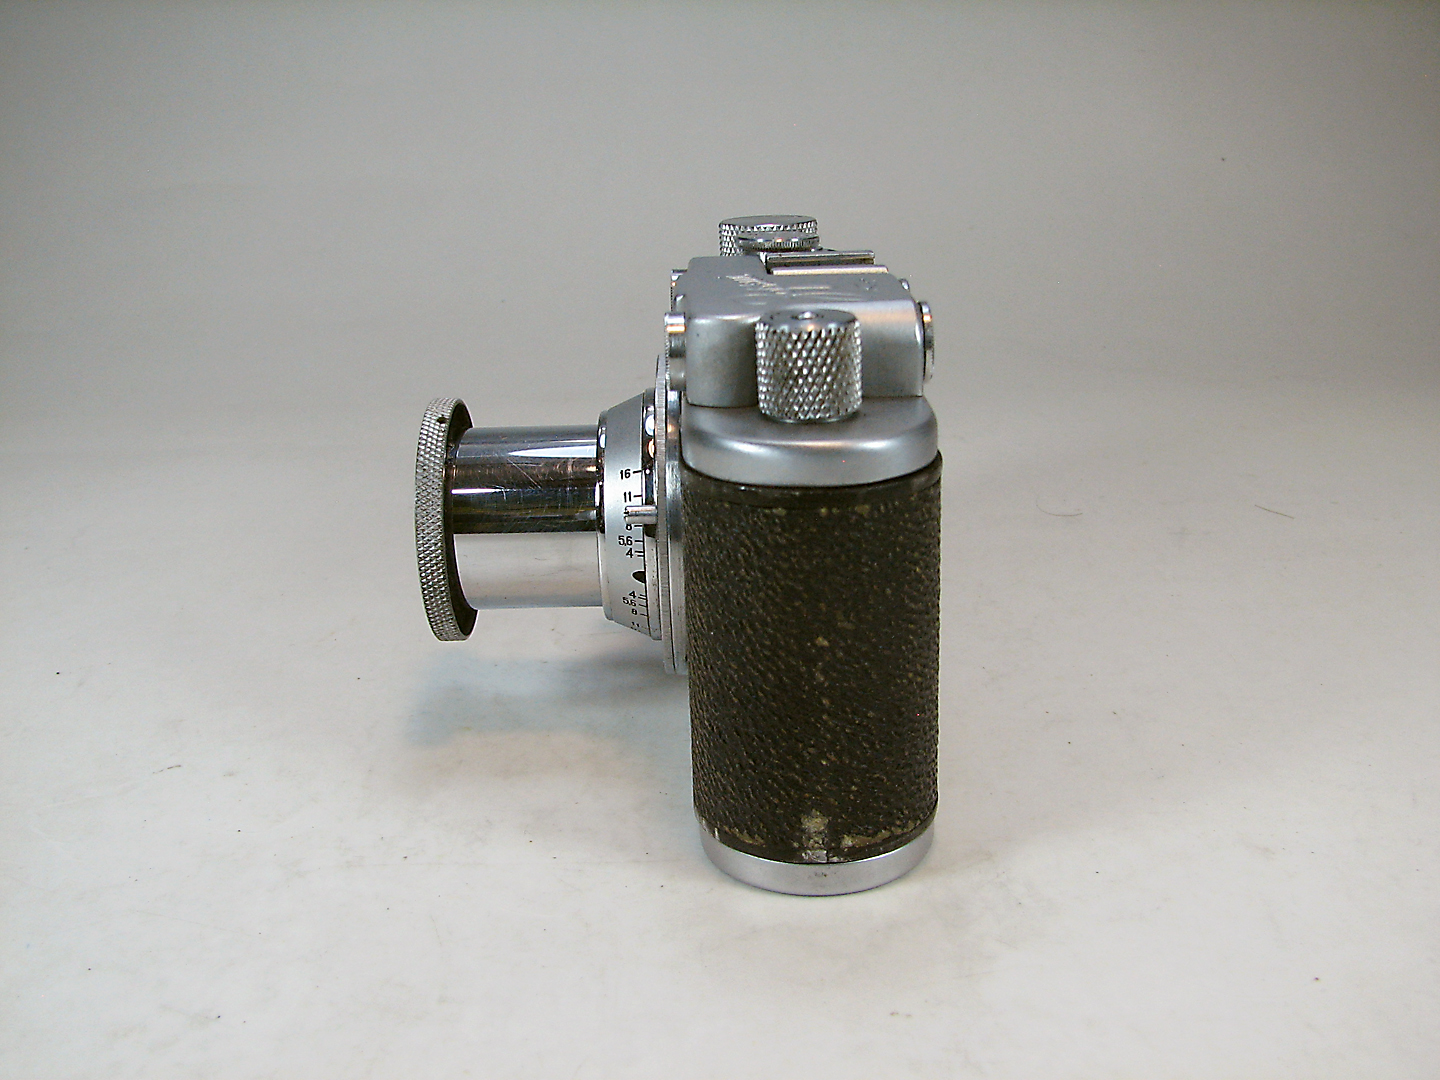 دوربین کلکسیونی و کلاسیک Zorki Type 1 